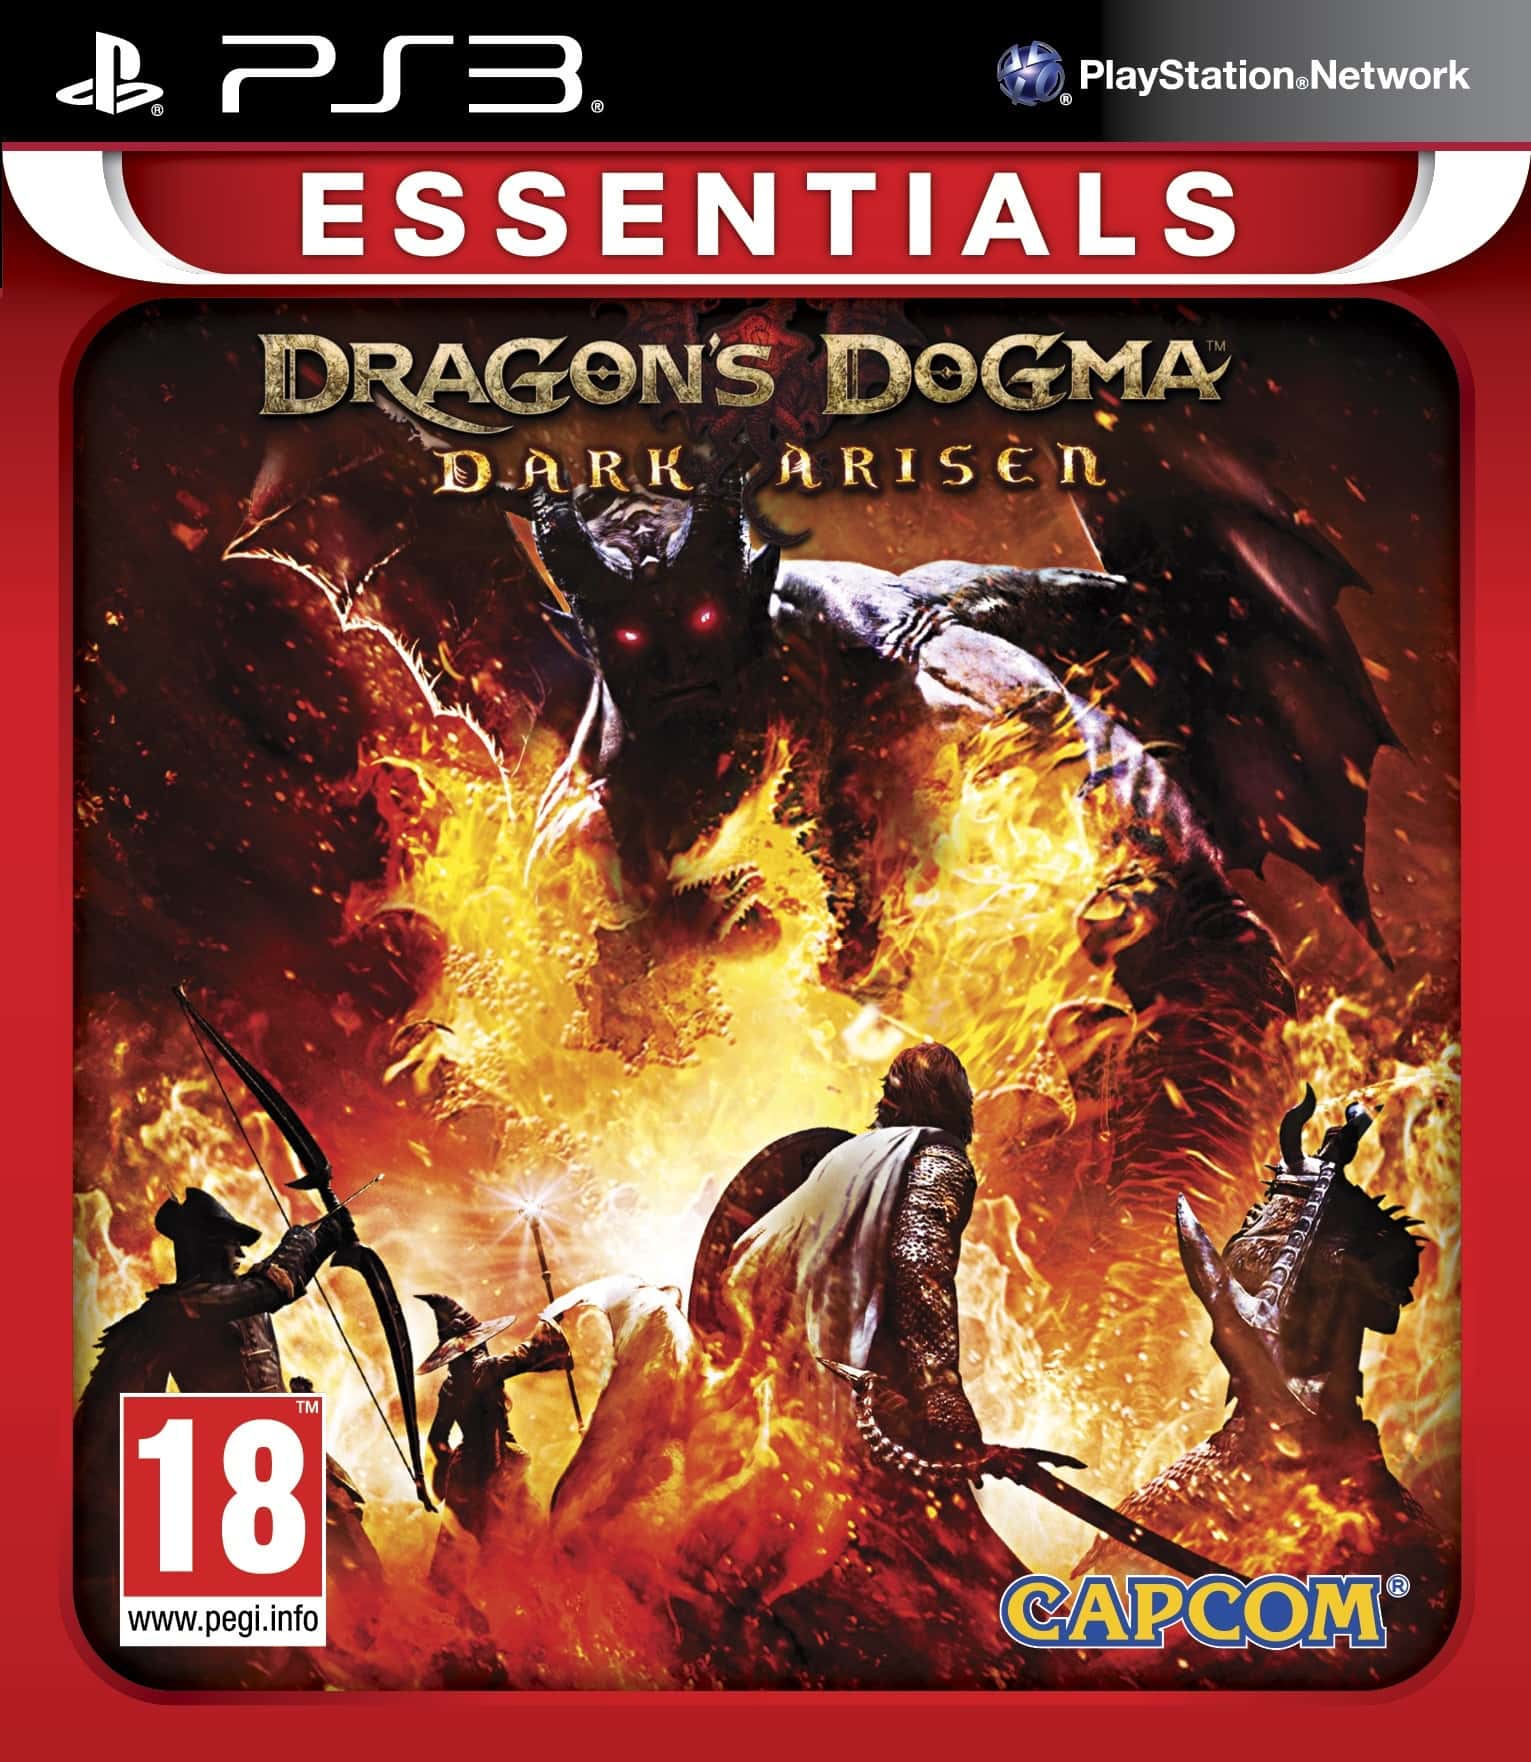 Dragon's Dogma: Dark Arisen, CapCom